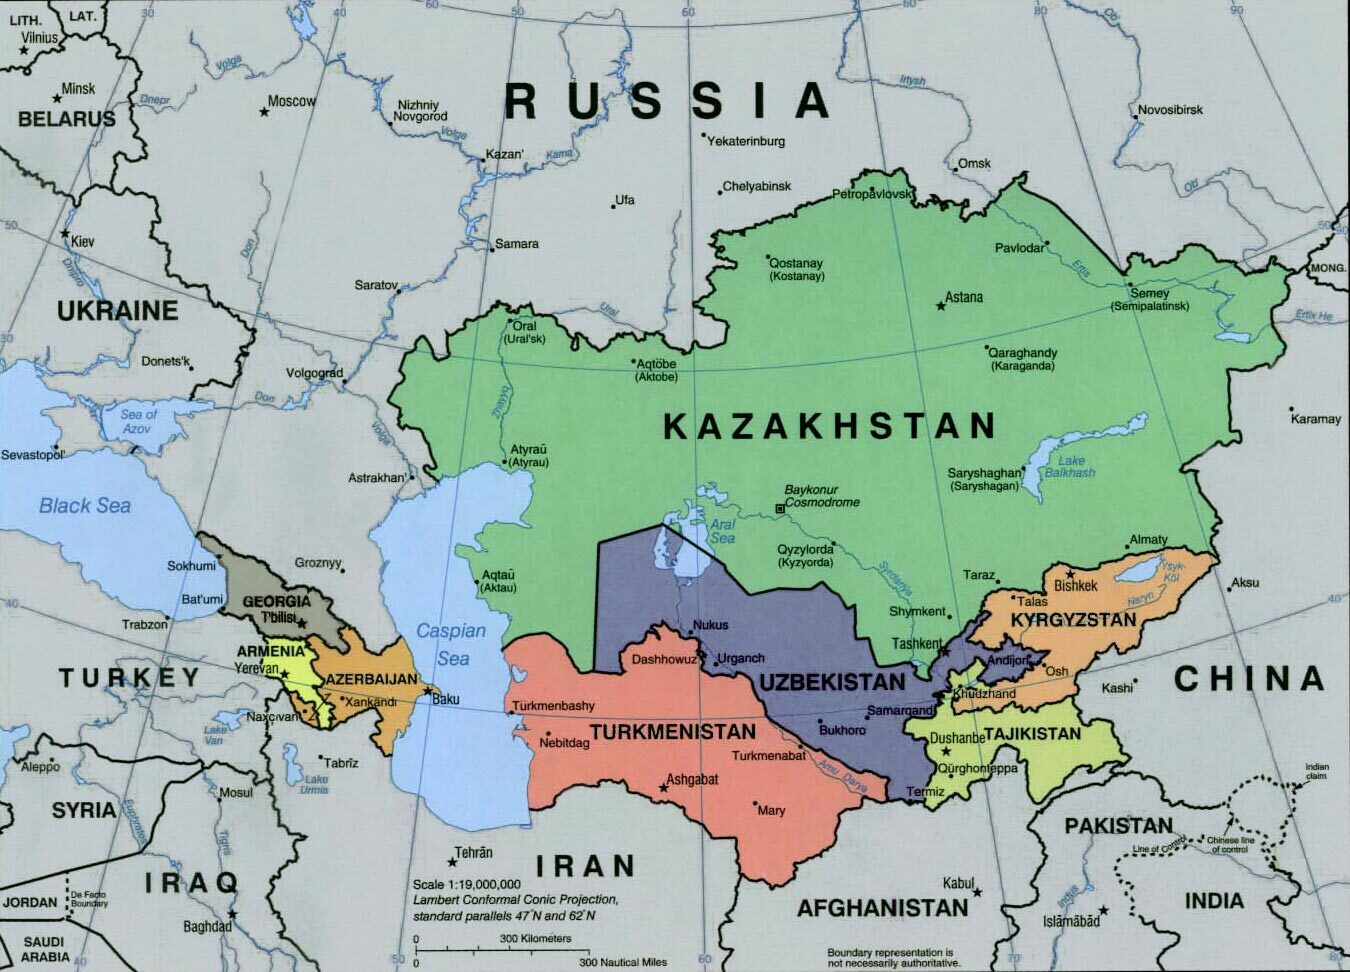 Kazakhstan borders